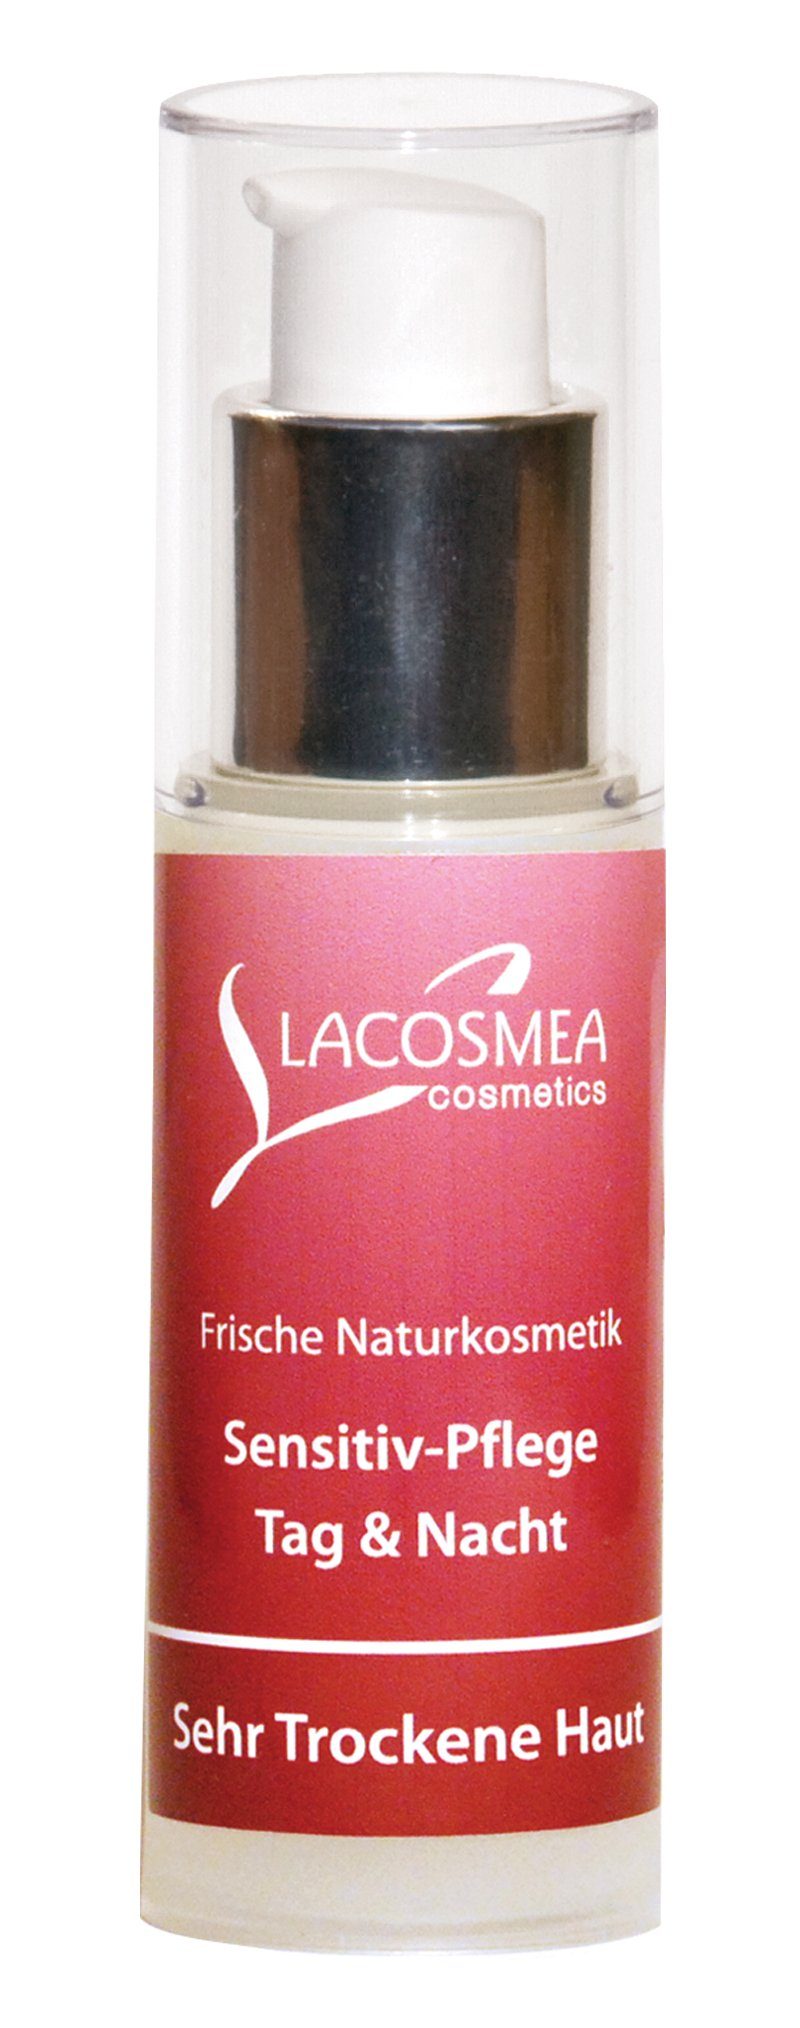 Sensitivpflege für Lacosmea trockene sehr Haut Cosmetics Gesichtspflege